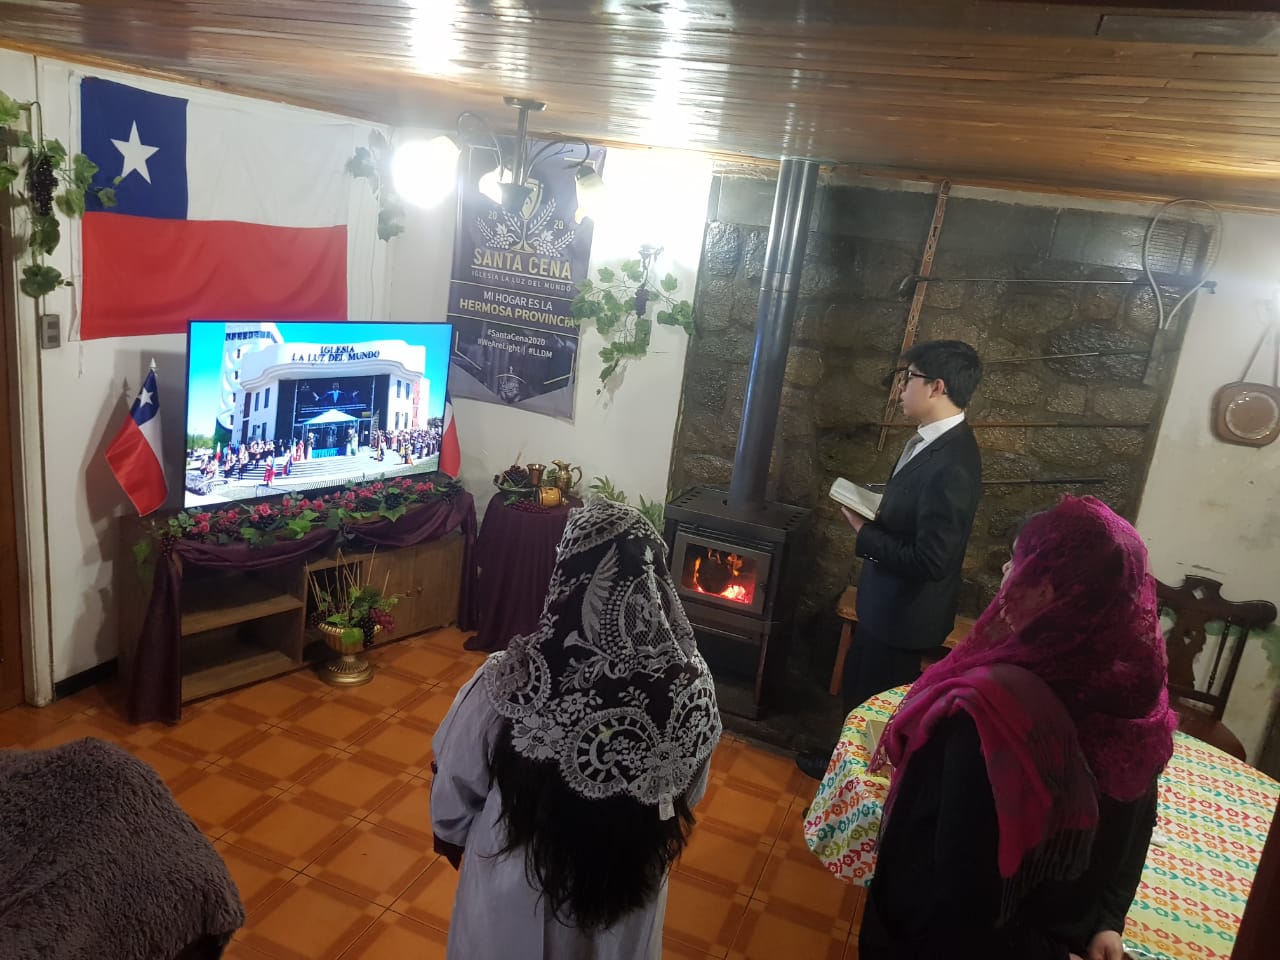 Iglesia La Luz del Mundo: Chile se une a la Santa Convocación